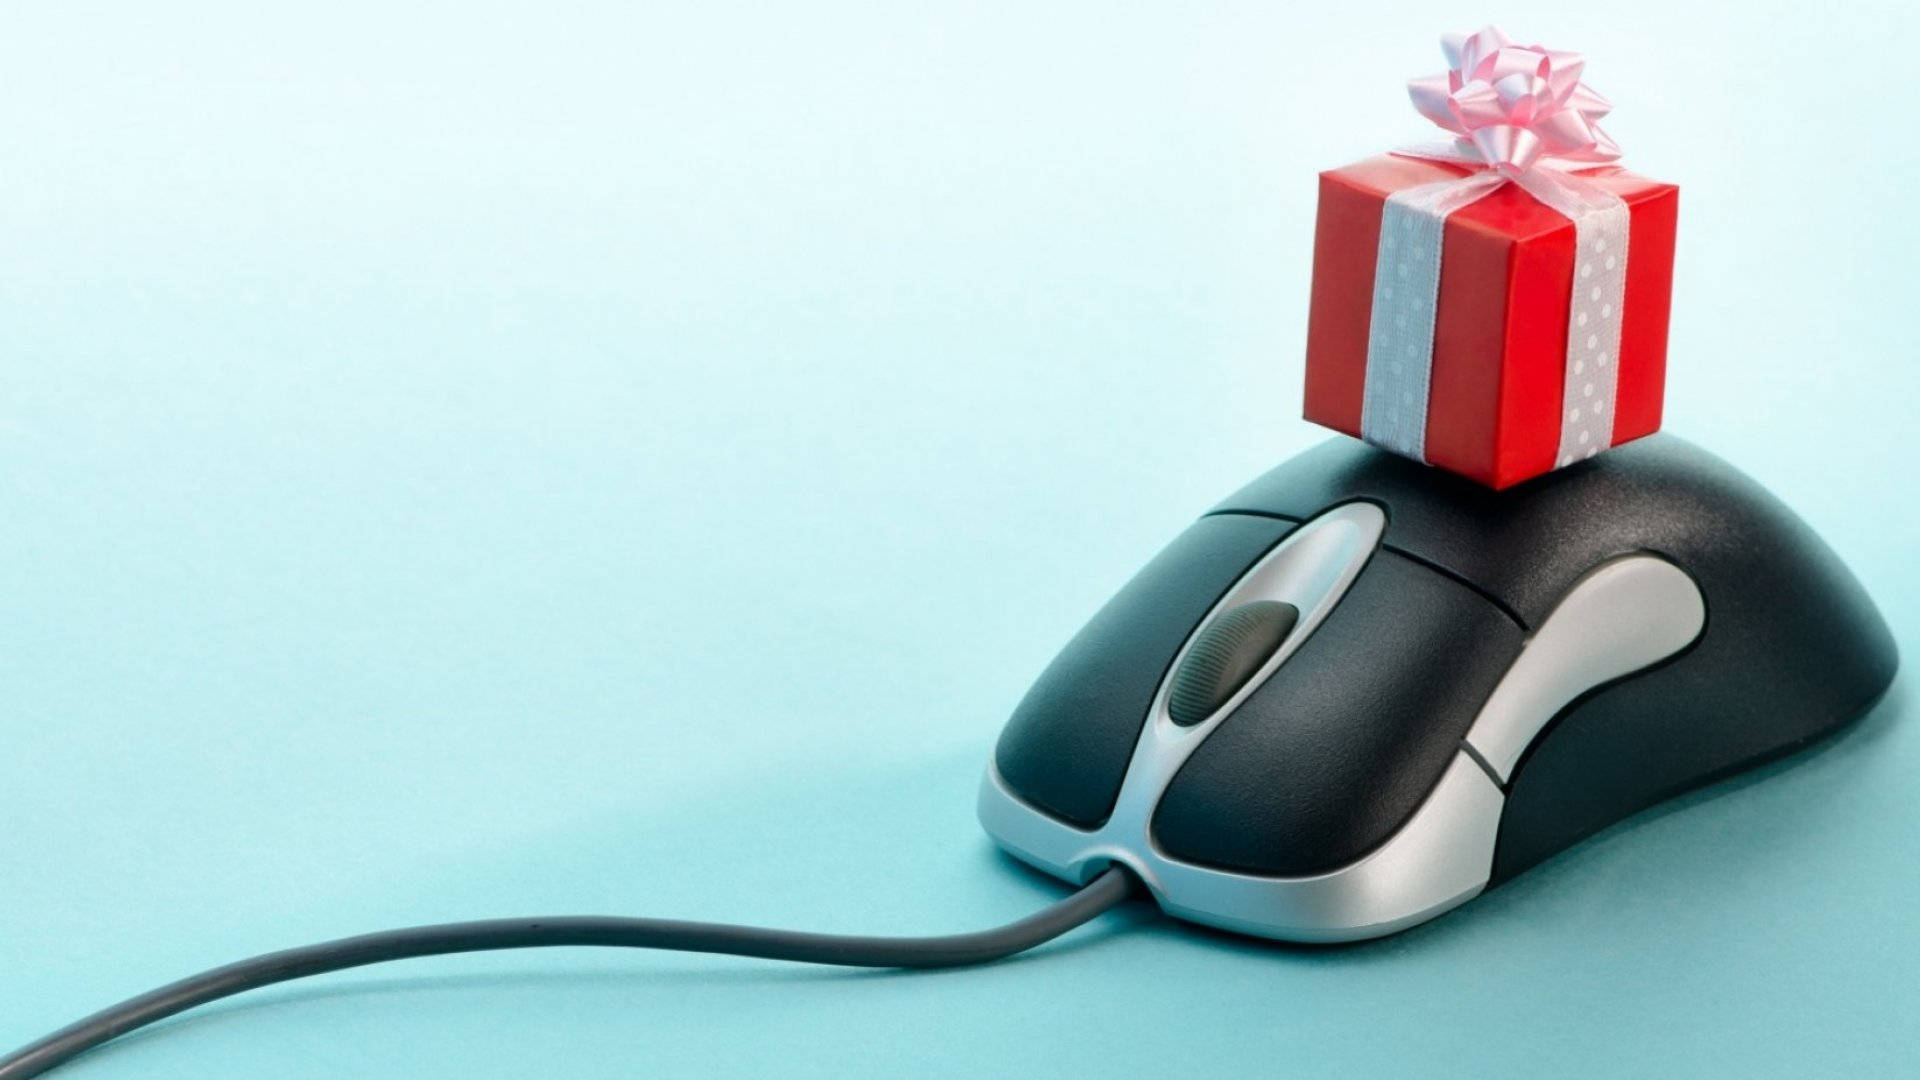 Pc Mouse Christmas Present